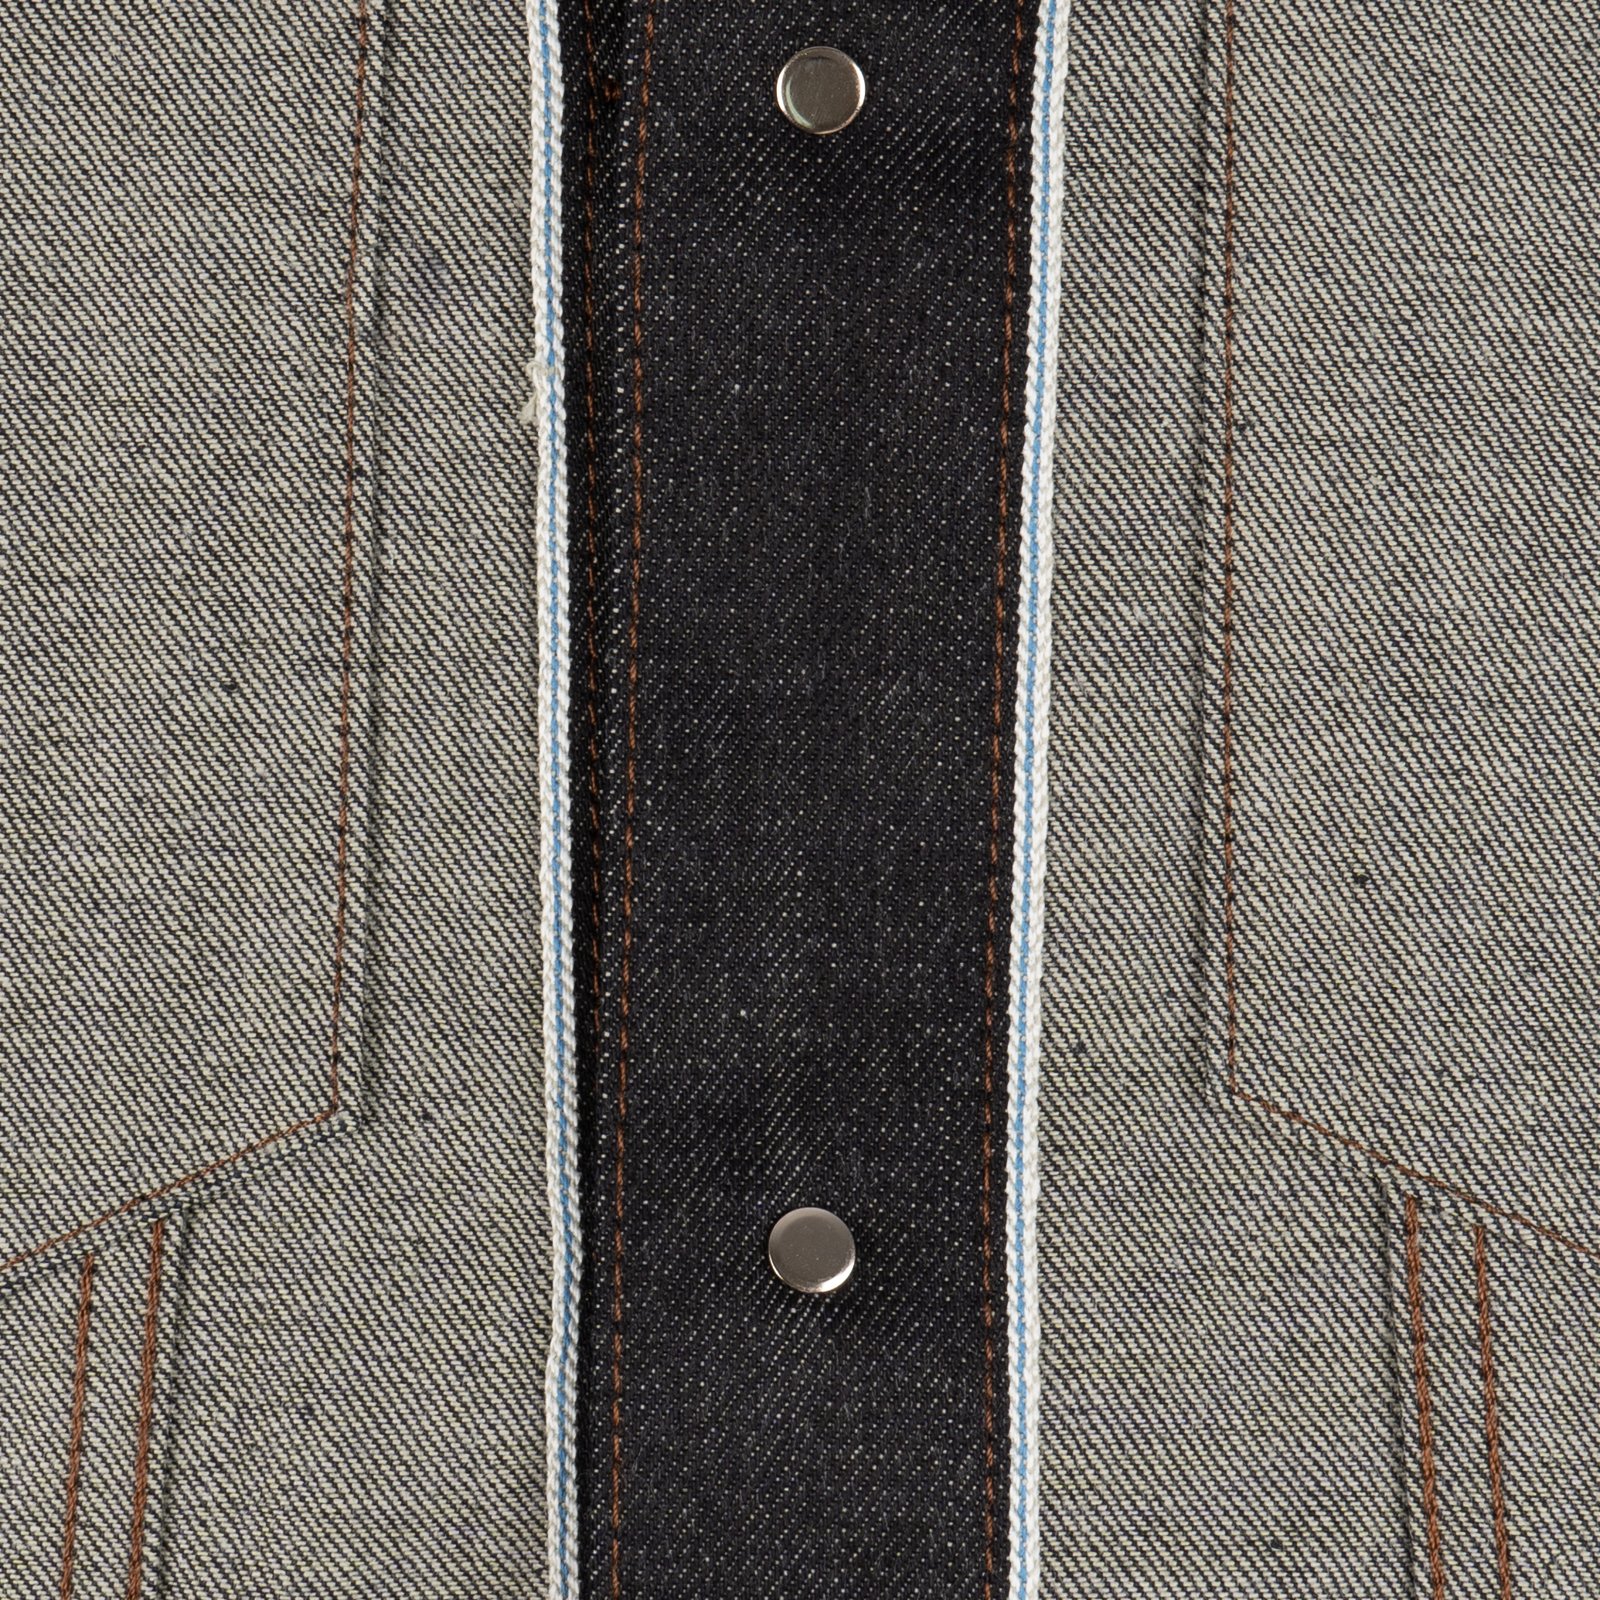  Blue Grass Denim Jacket - closeup interior 